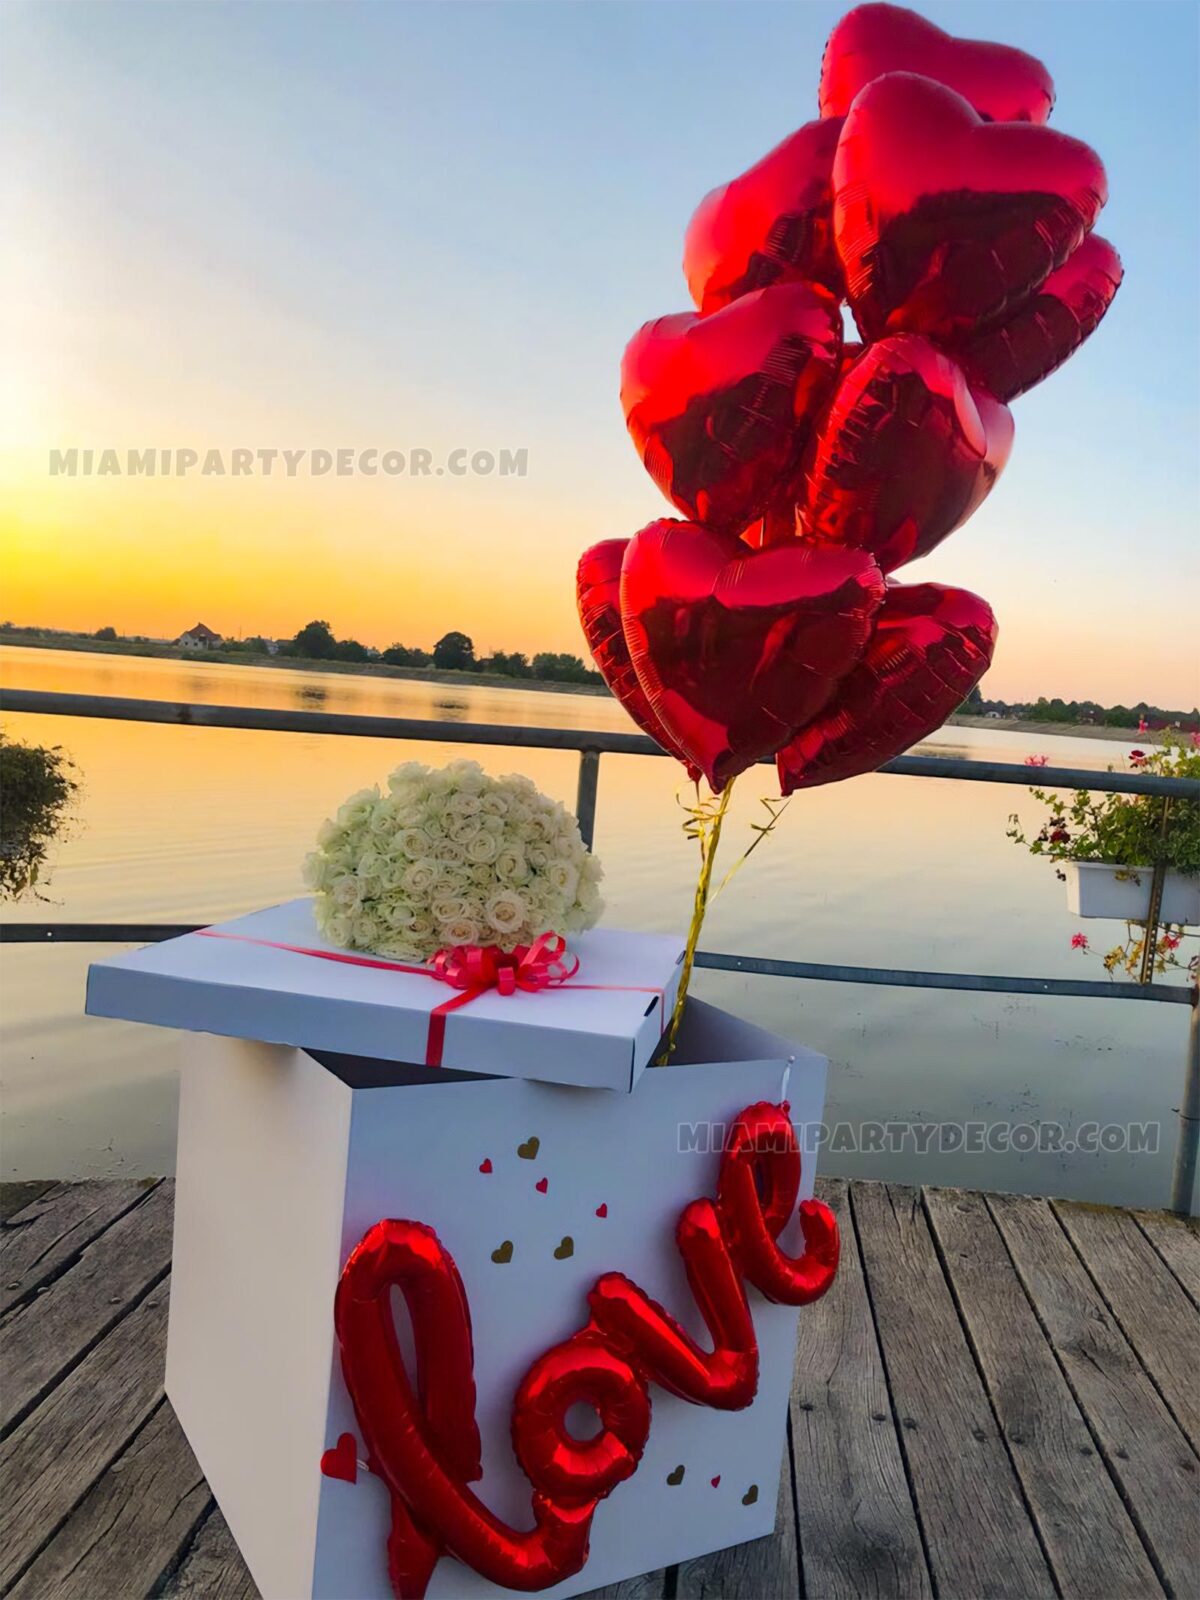 product love surprise balloon kit miami party decor 3 v